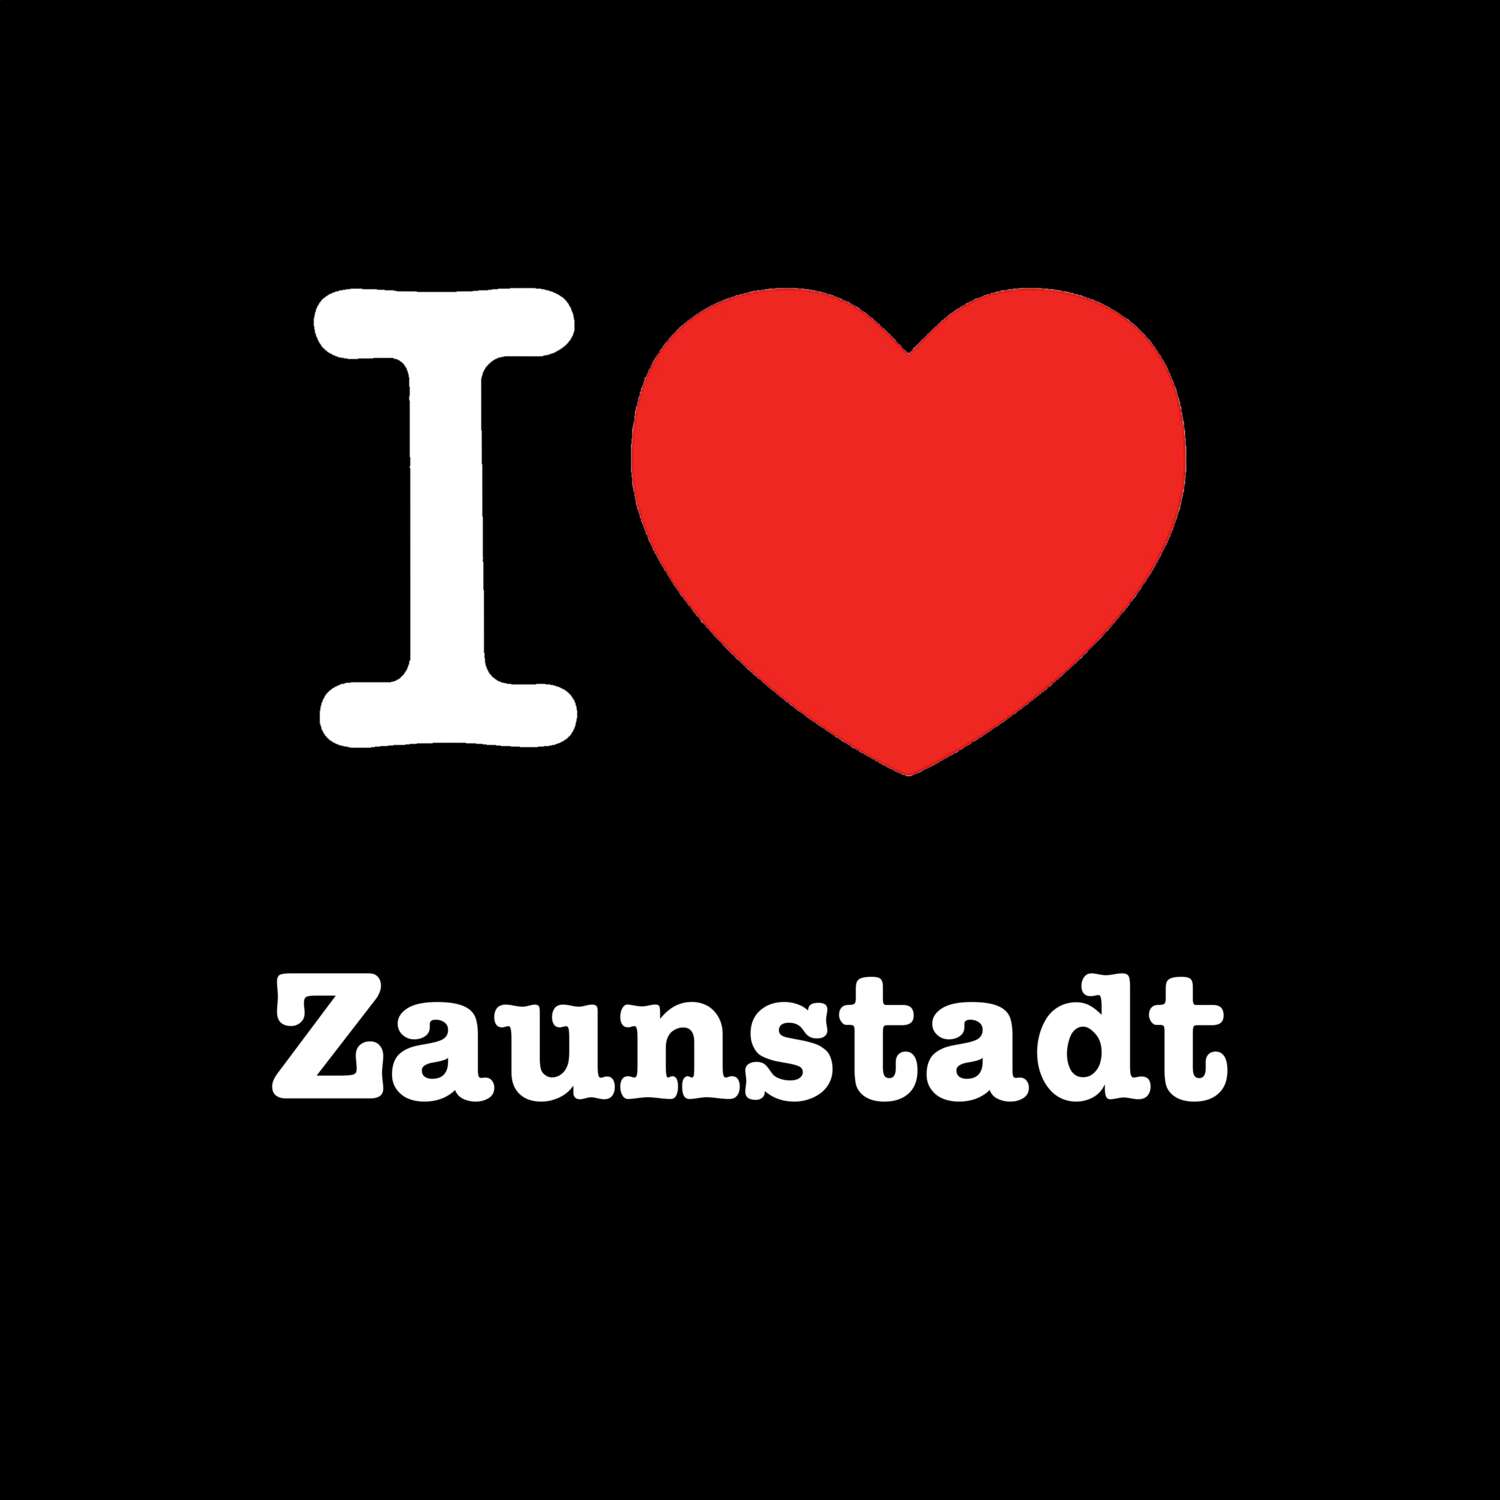 Zaunstadt T-Shirt »I love«